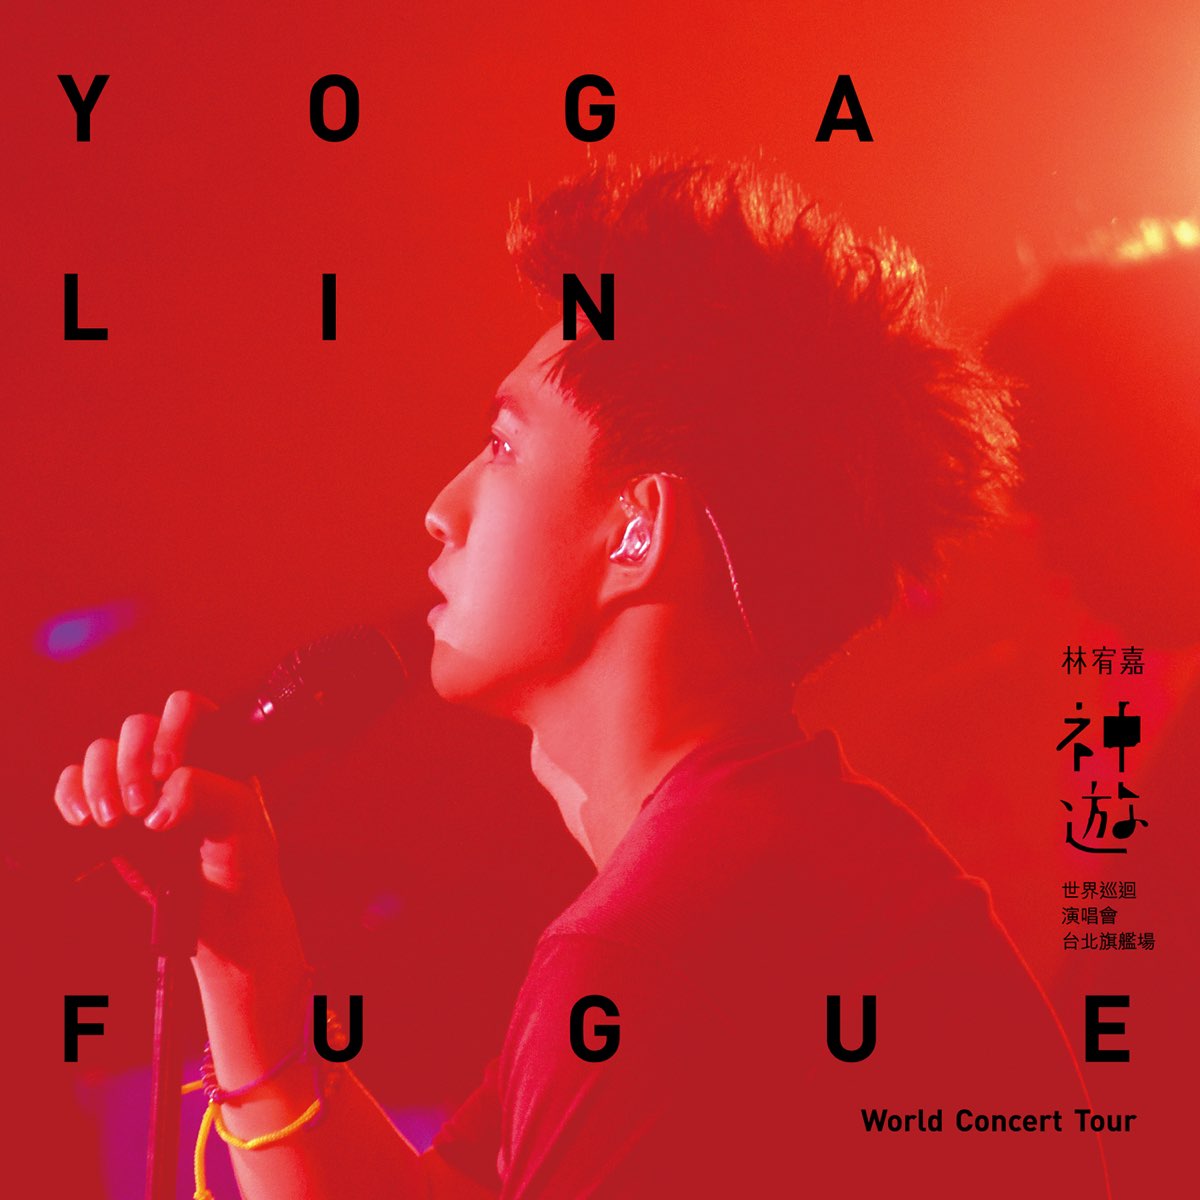 ‎Yoga Lin Fugue World Concert Tour (Live) by Yoga Lin on Apple Music